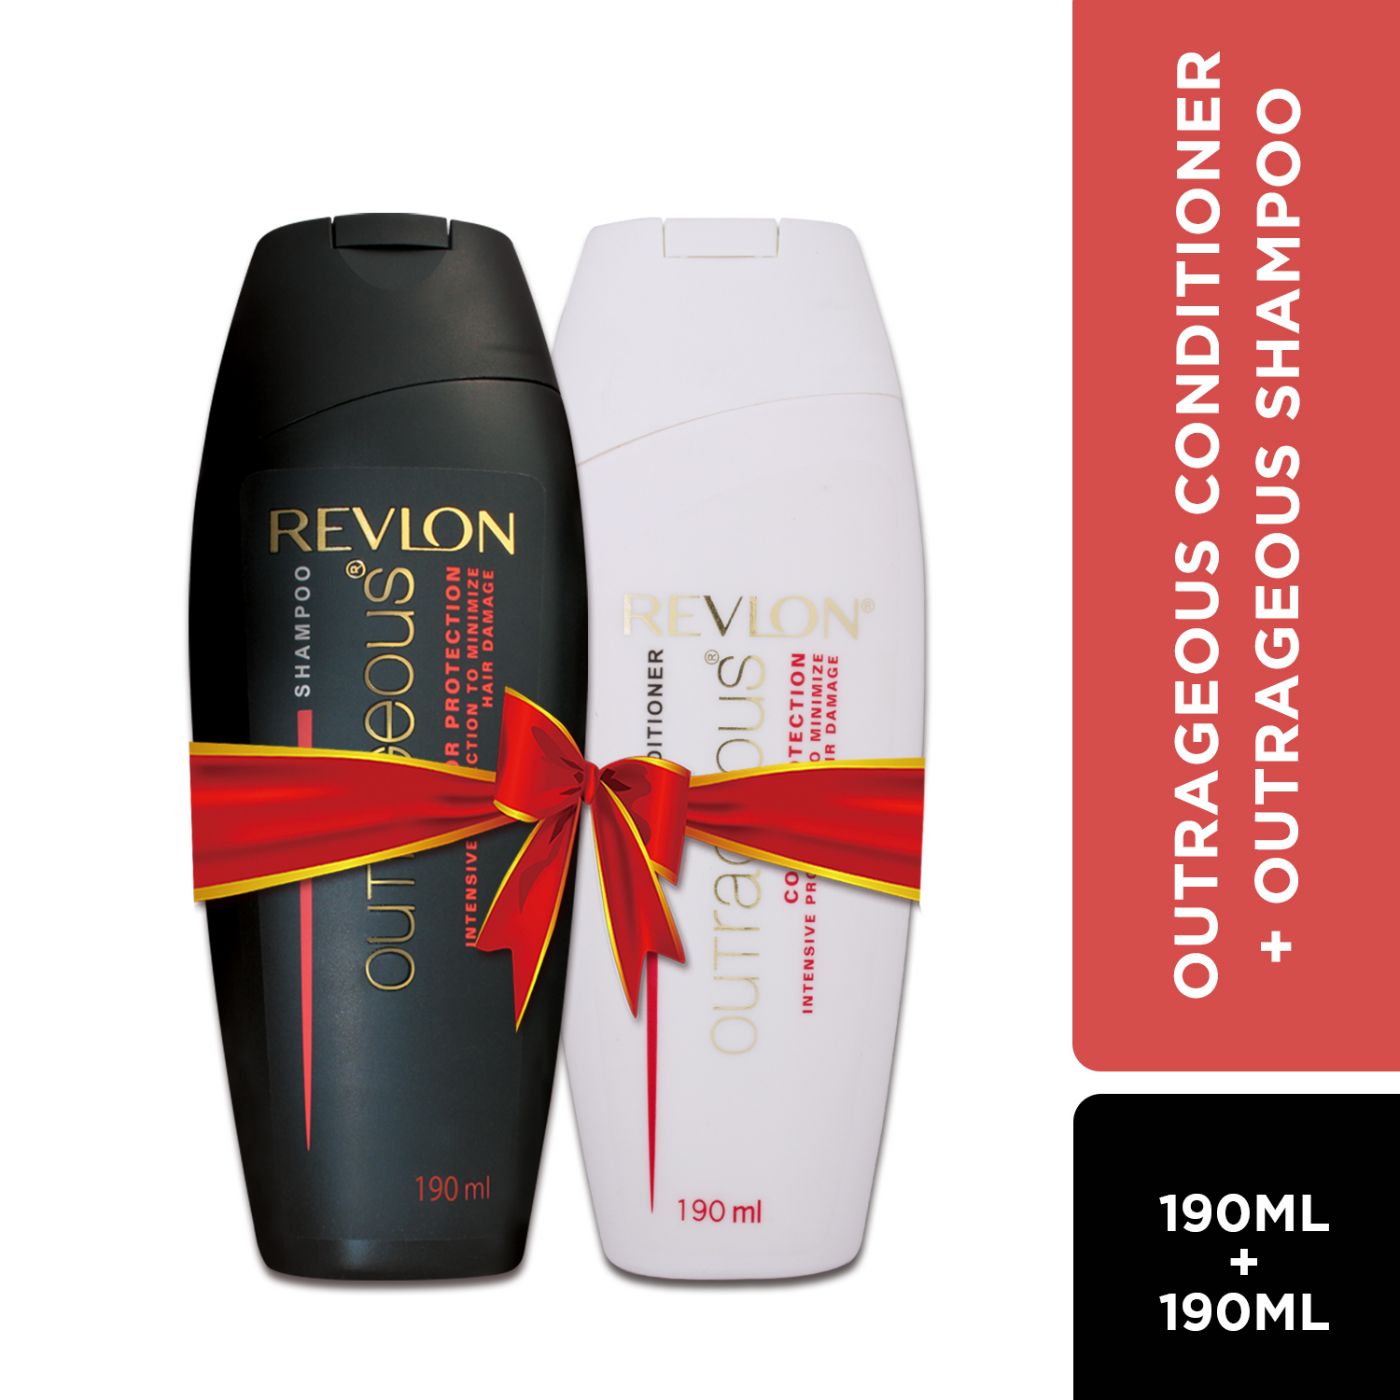 Revlon Outrageous Conditioner, 190ml + Outrageous Color protection Shampoo, 190ml